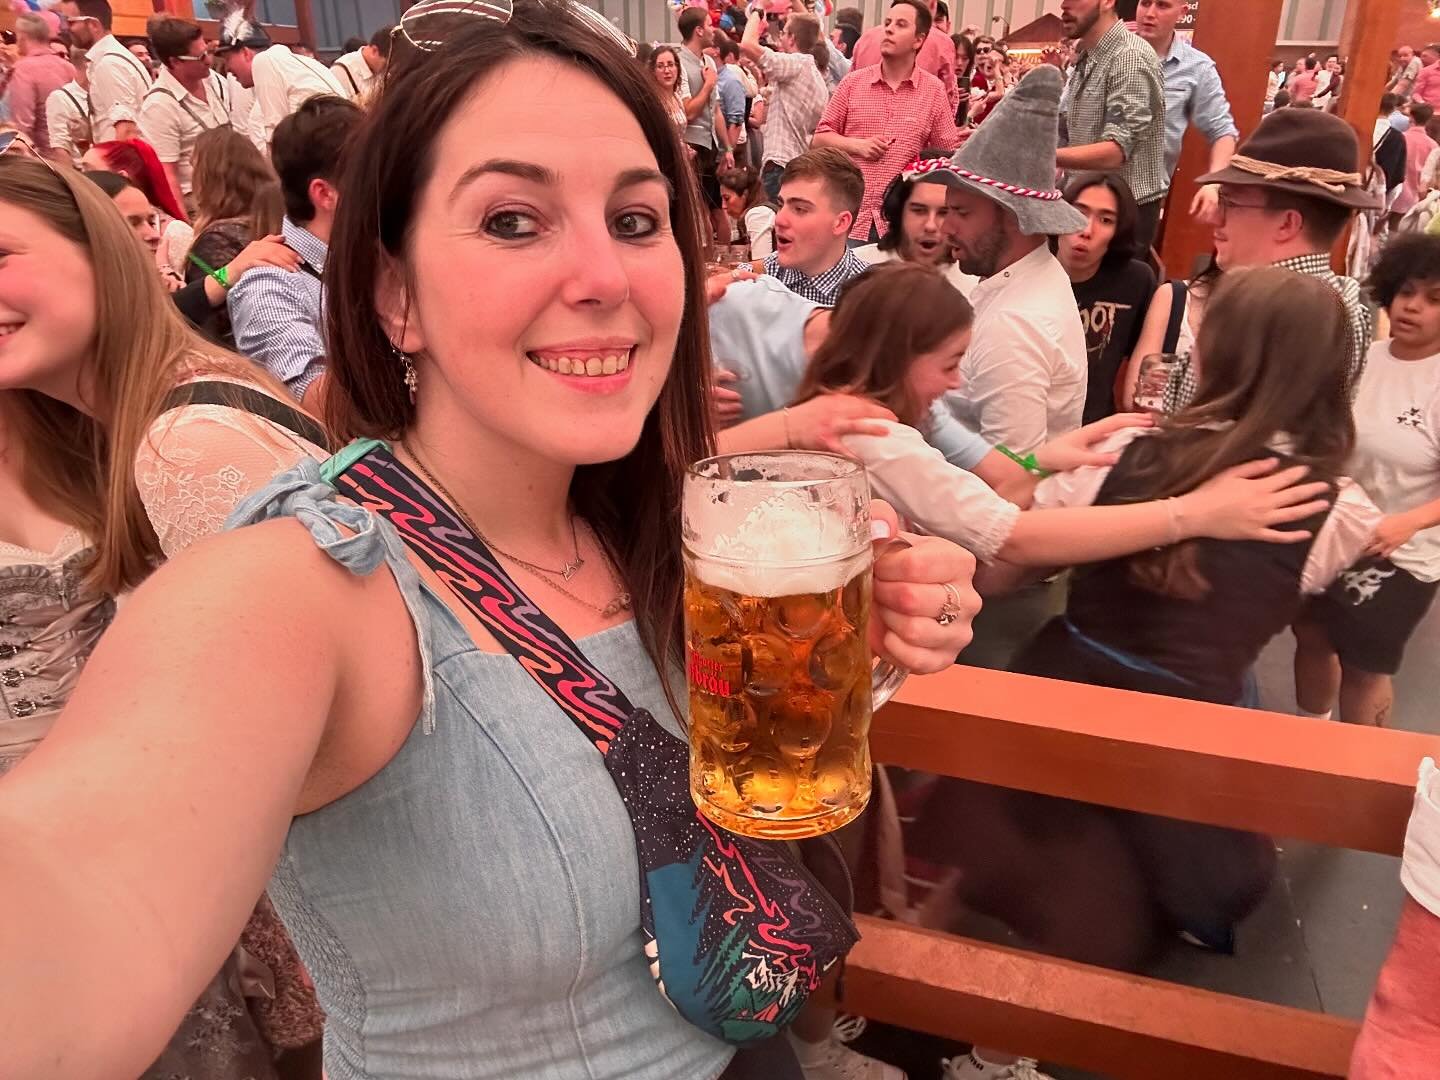 Stuttgart Fr&uuml;hlingsfest!

#Fr&uuml;hlingsfest! #stuttgart #germany #germanytravel  #germany🇩🇪 #solotravel  #solofemaletravel  #wanderlust  #wanderer  #wander #fruhlingsfest #beer  #germanbeer